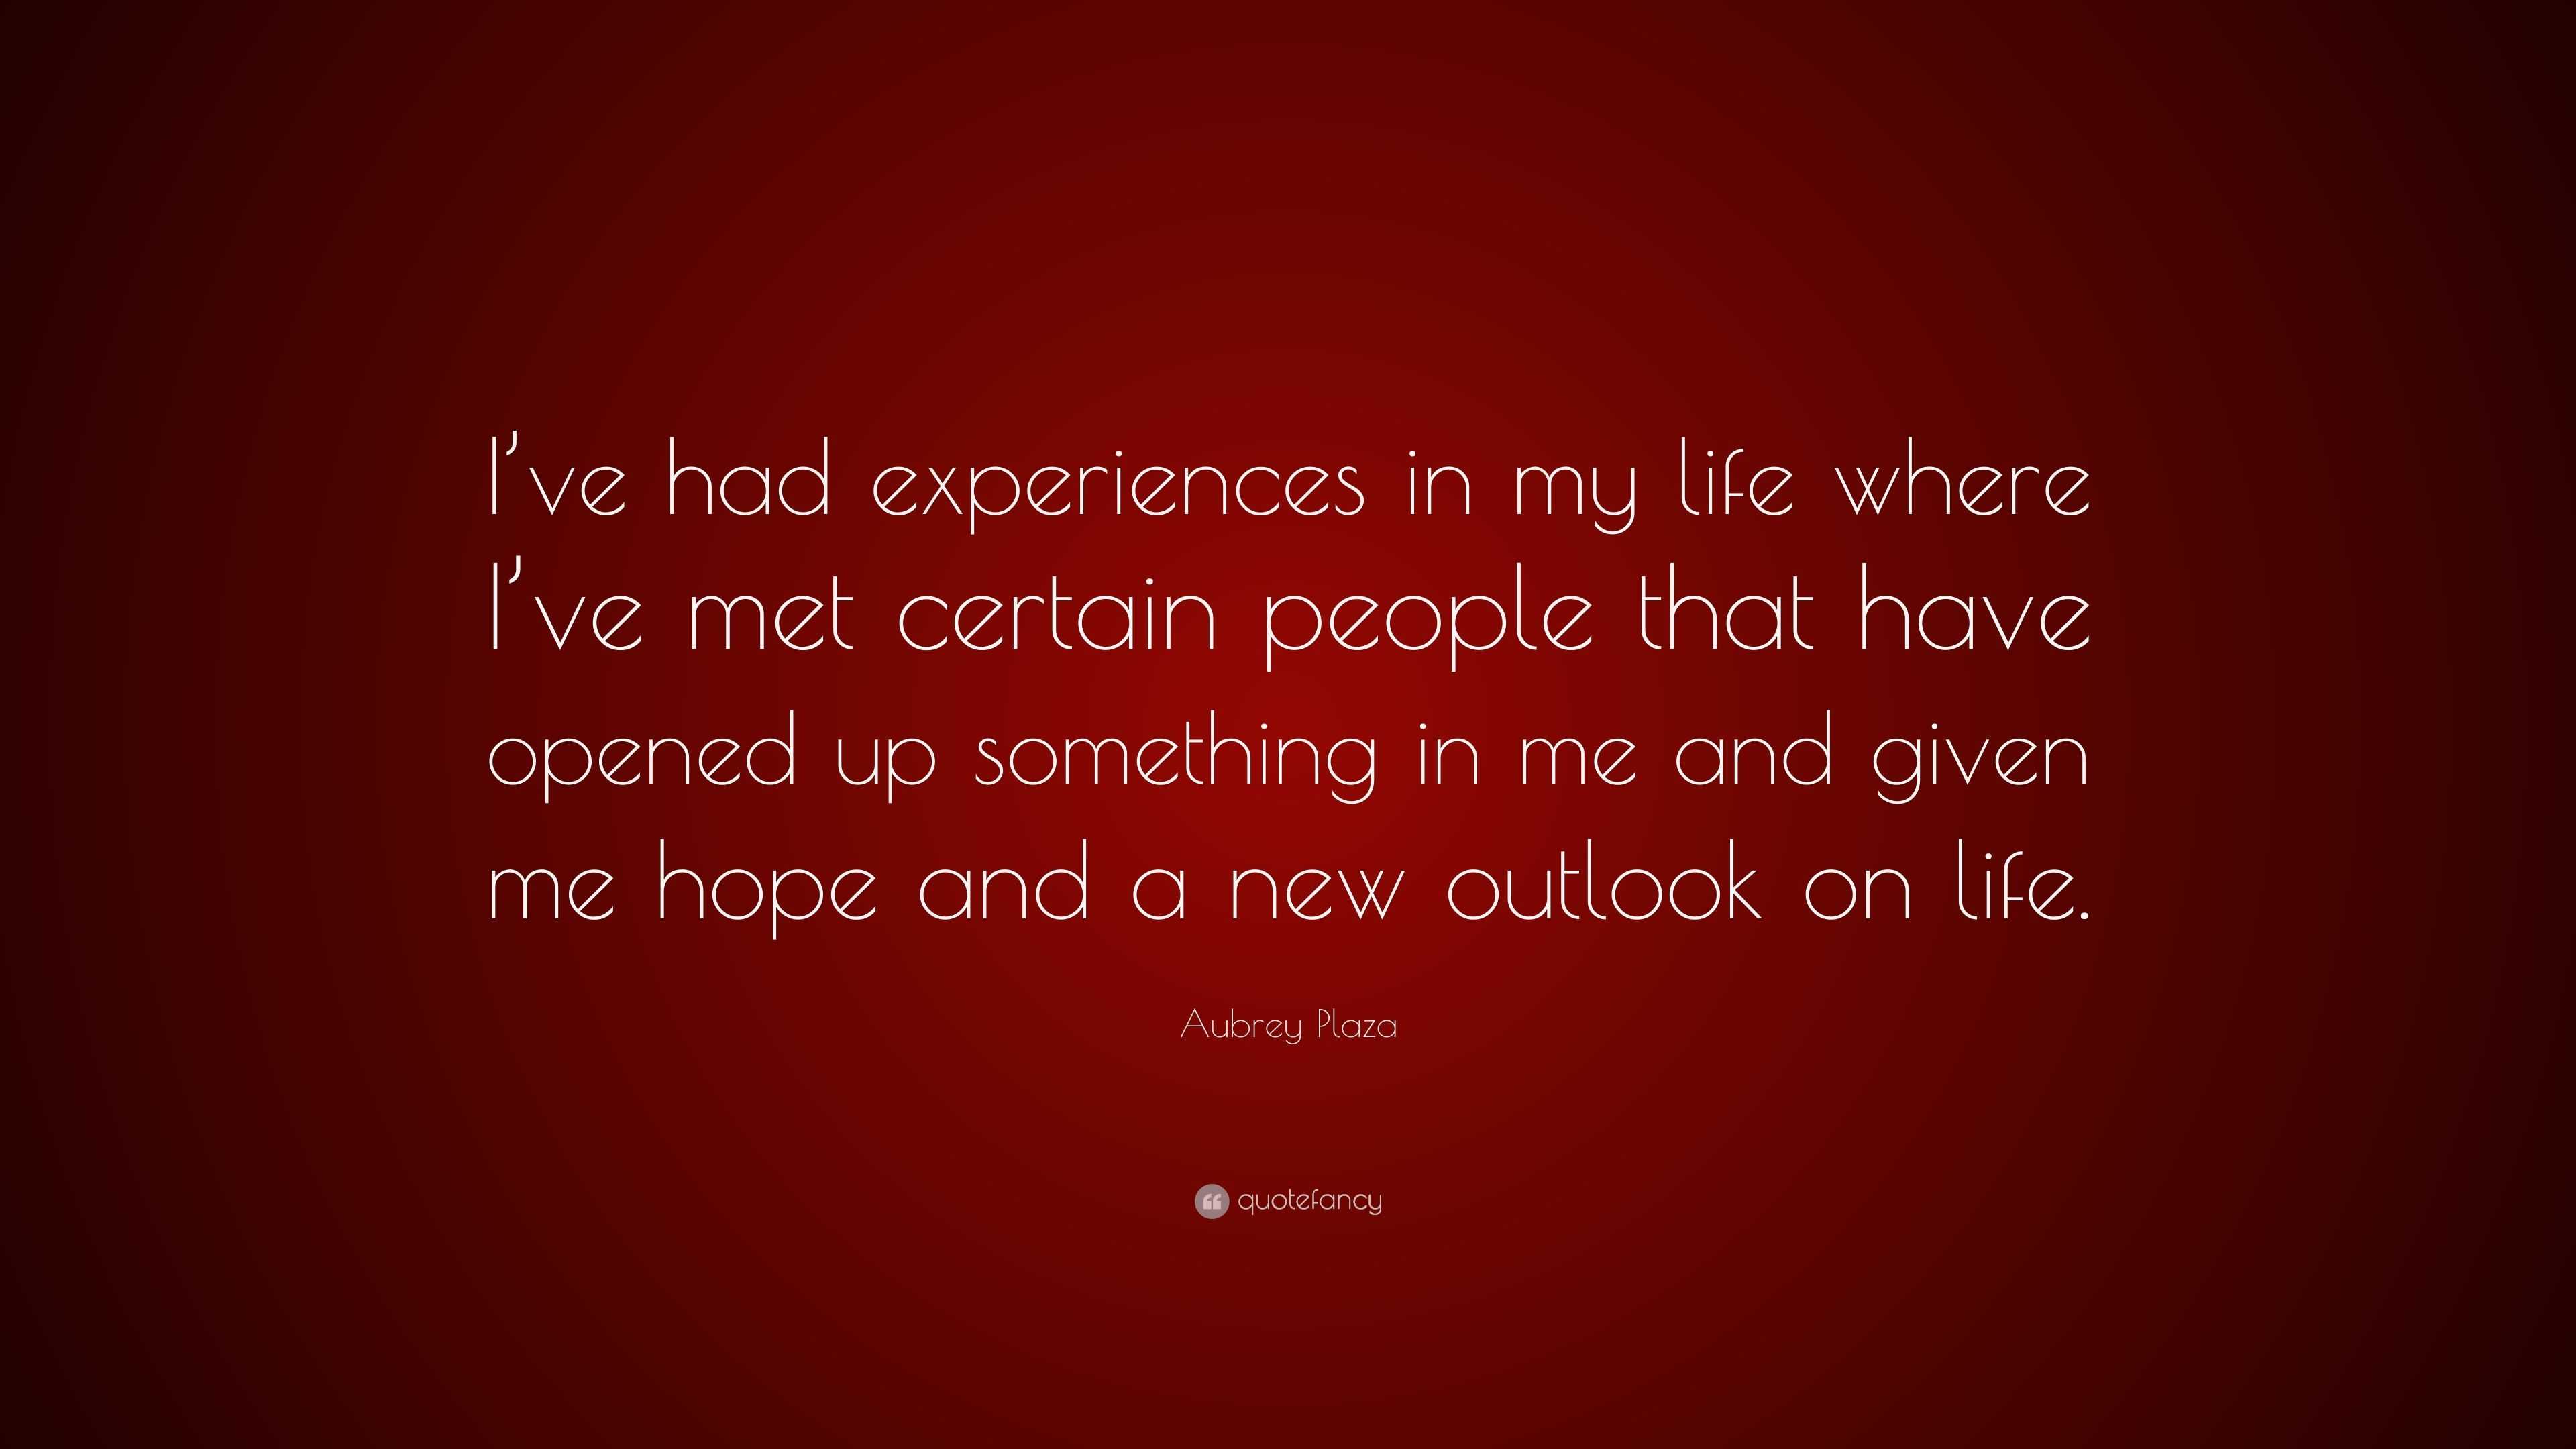 Aubrey Plaza Quote “I ve had experiences in my life where I